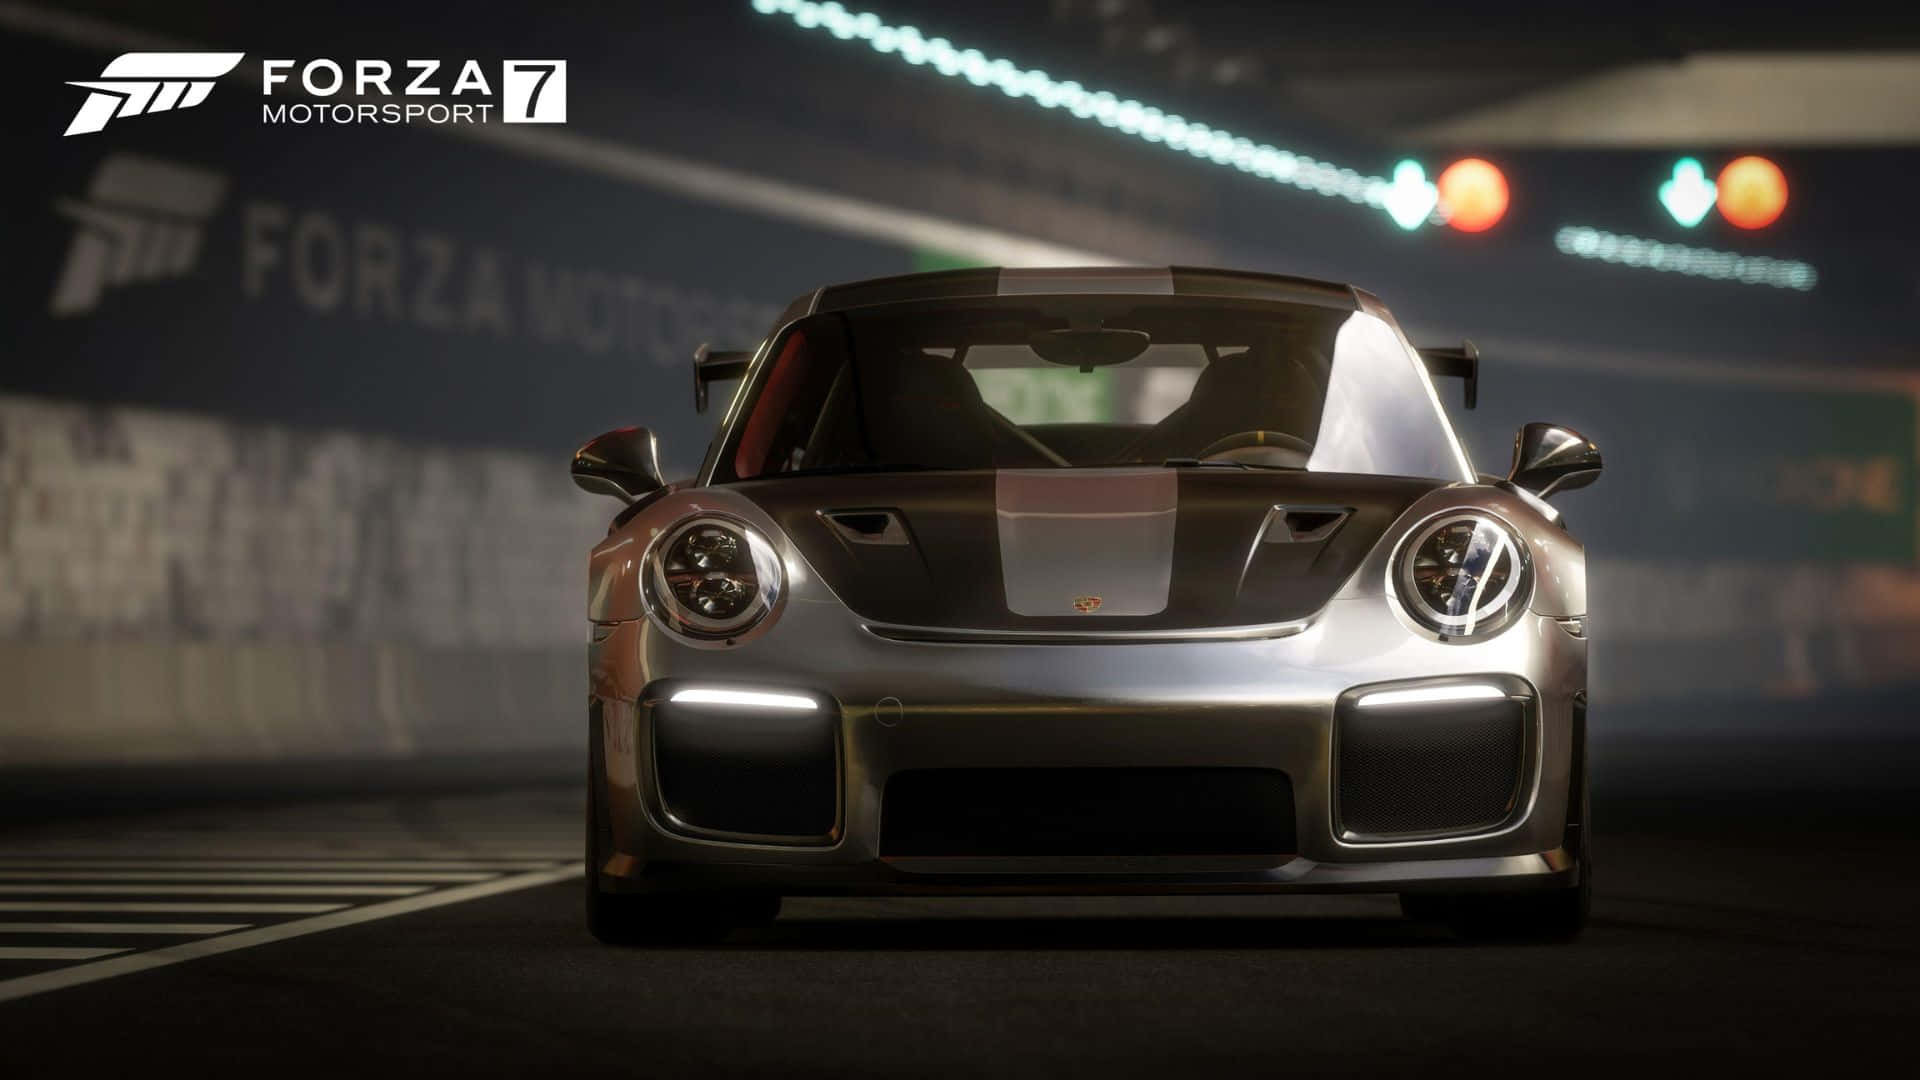 Hd Forza Motorsport 7 Background Night With Porsche 911 Wallpaper